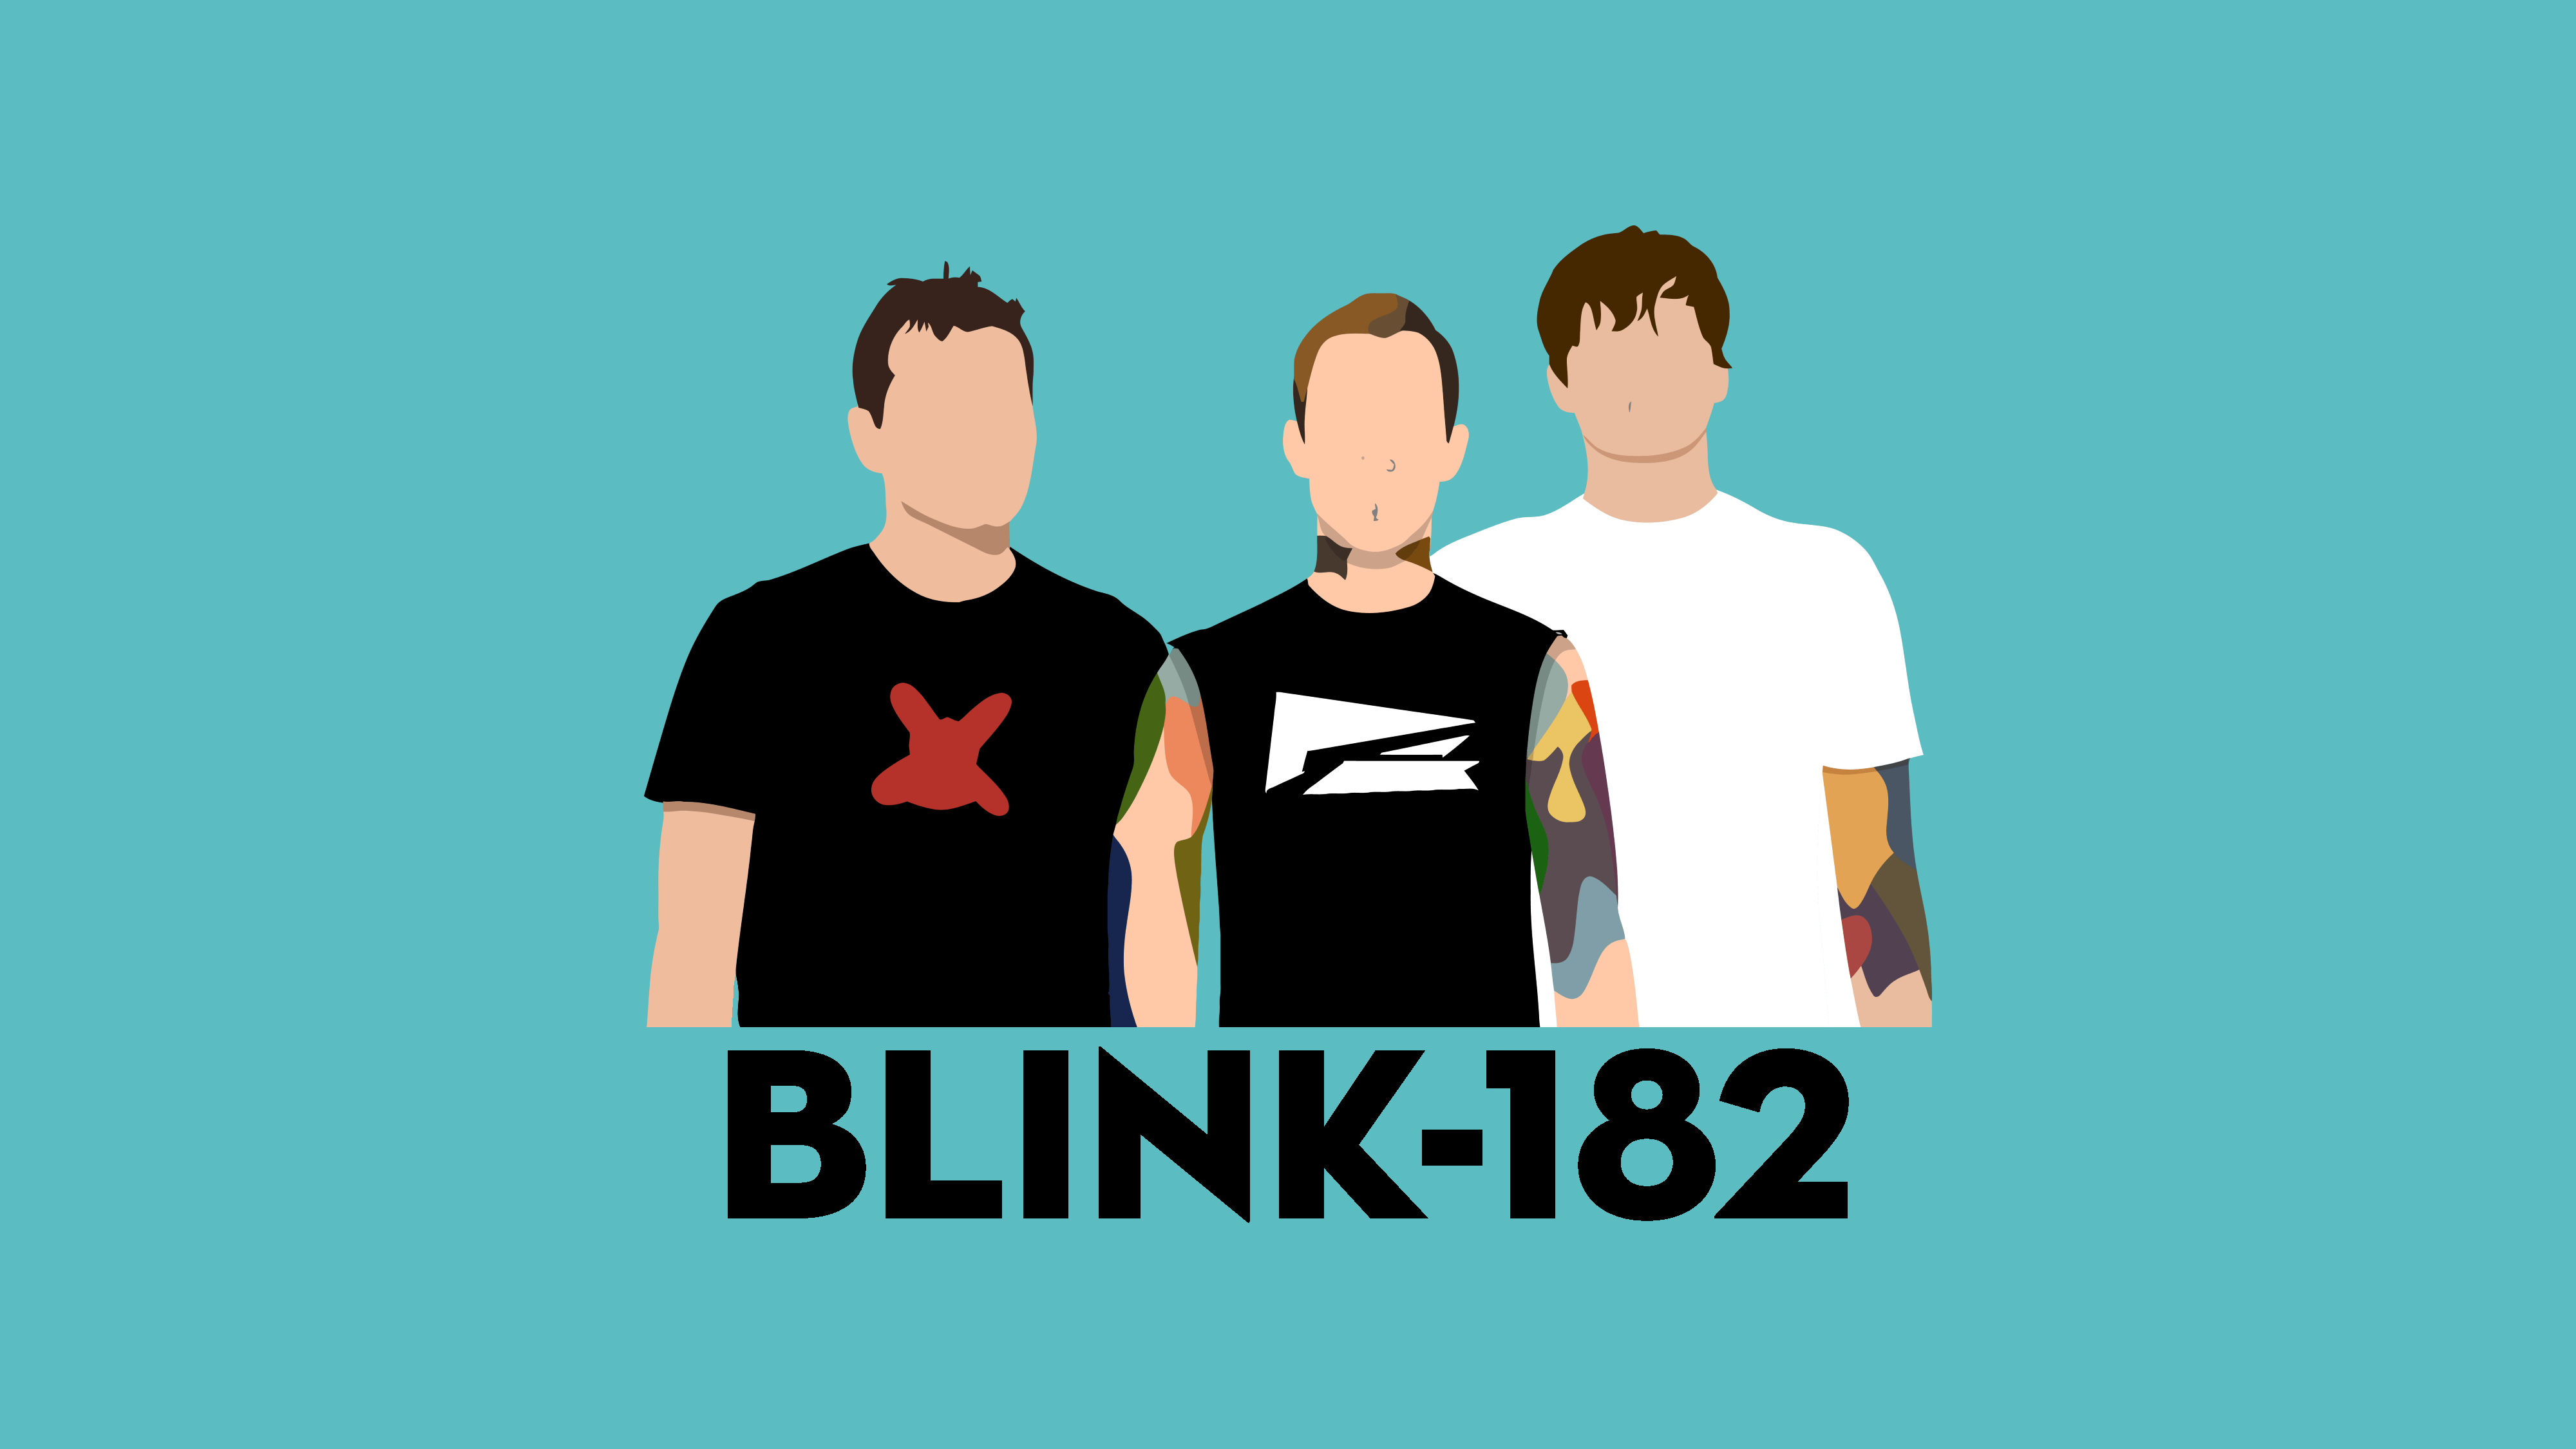 I Made A Minimalistic? Blink 182 Wallpaper. Enjoy